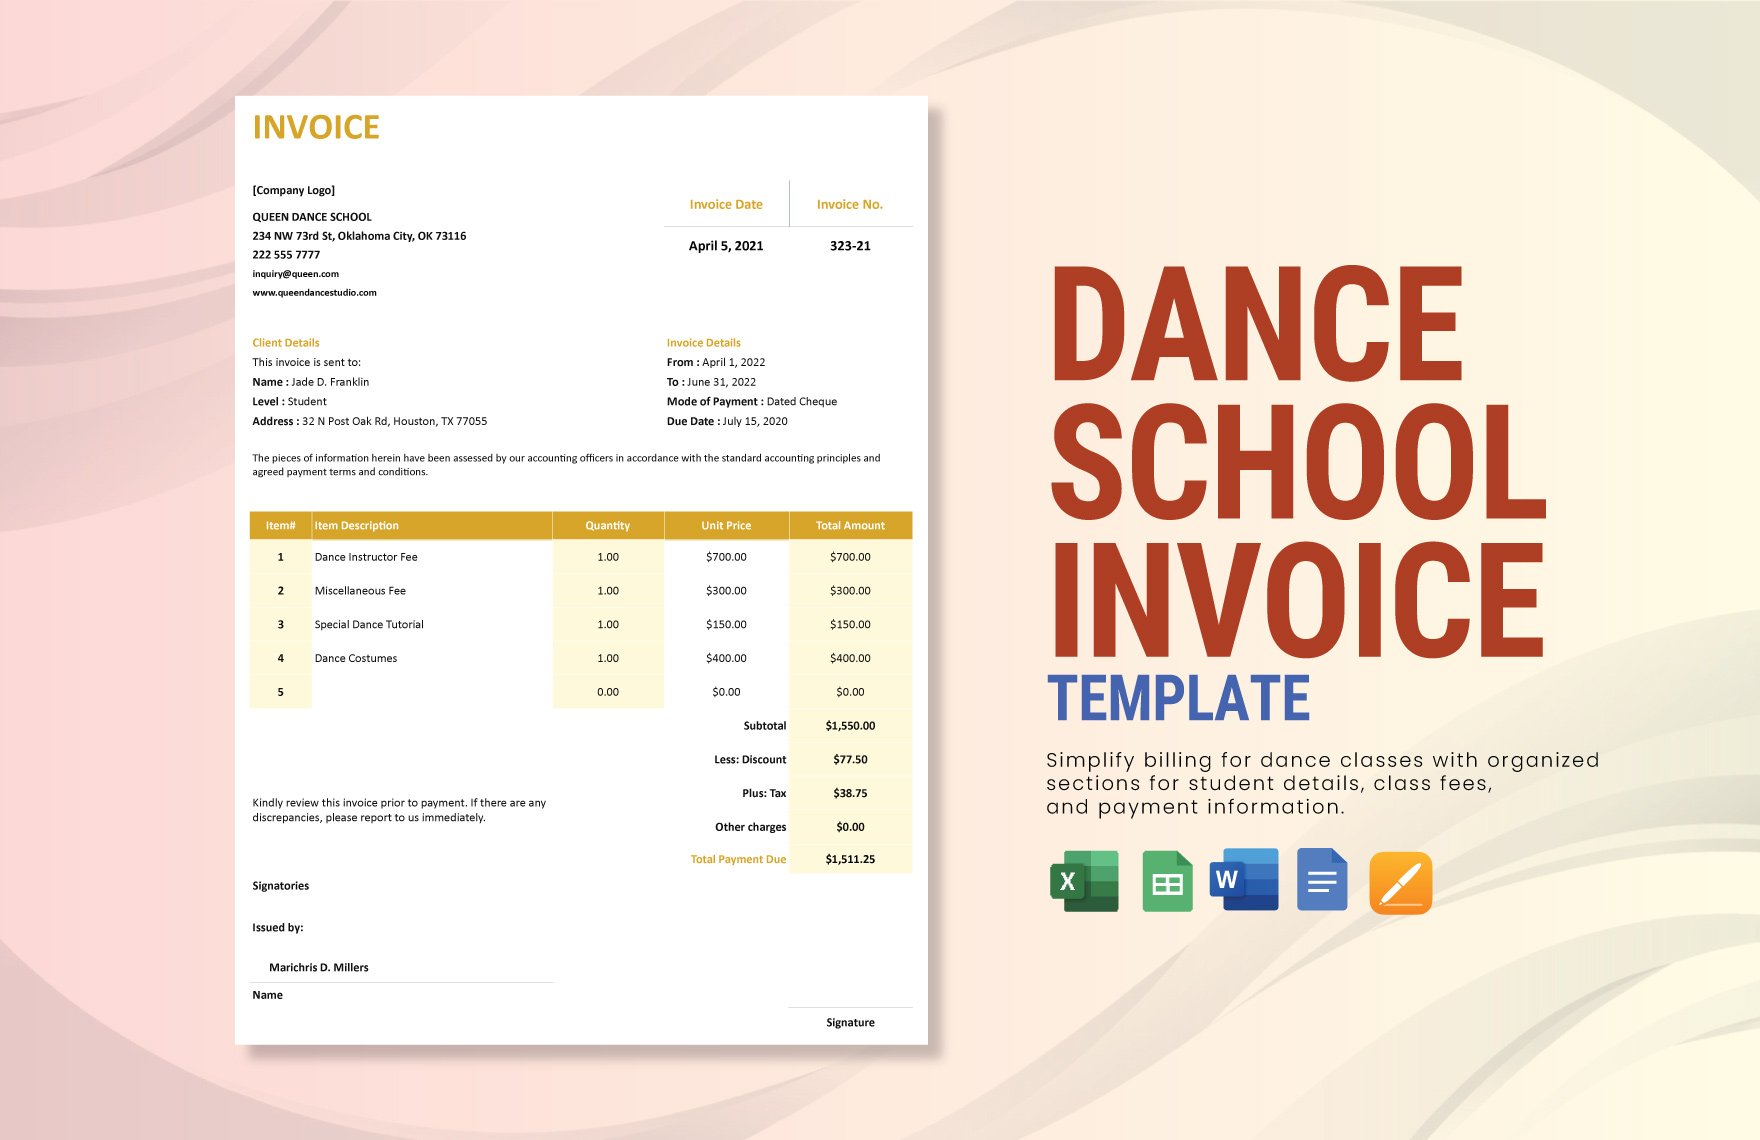 Dance School Invoice Template